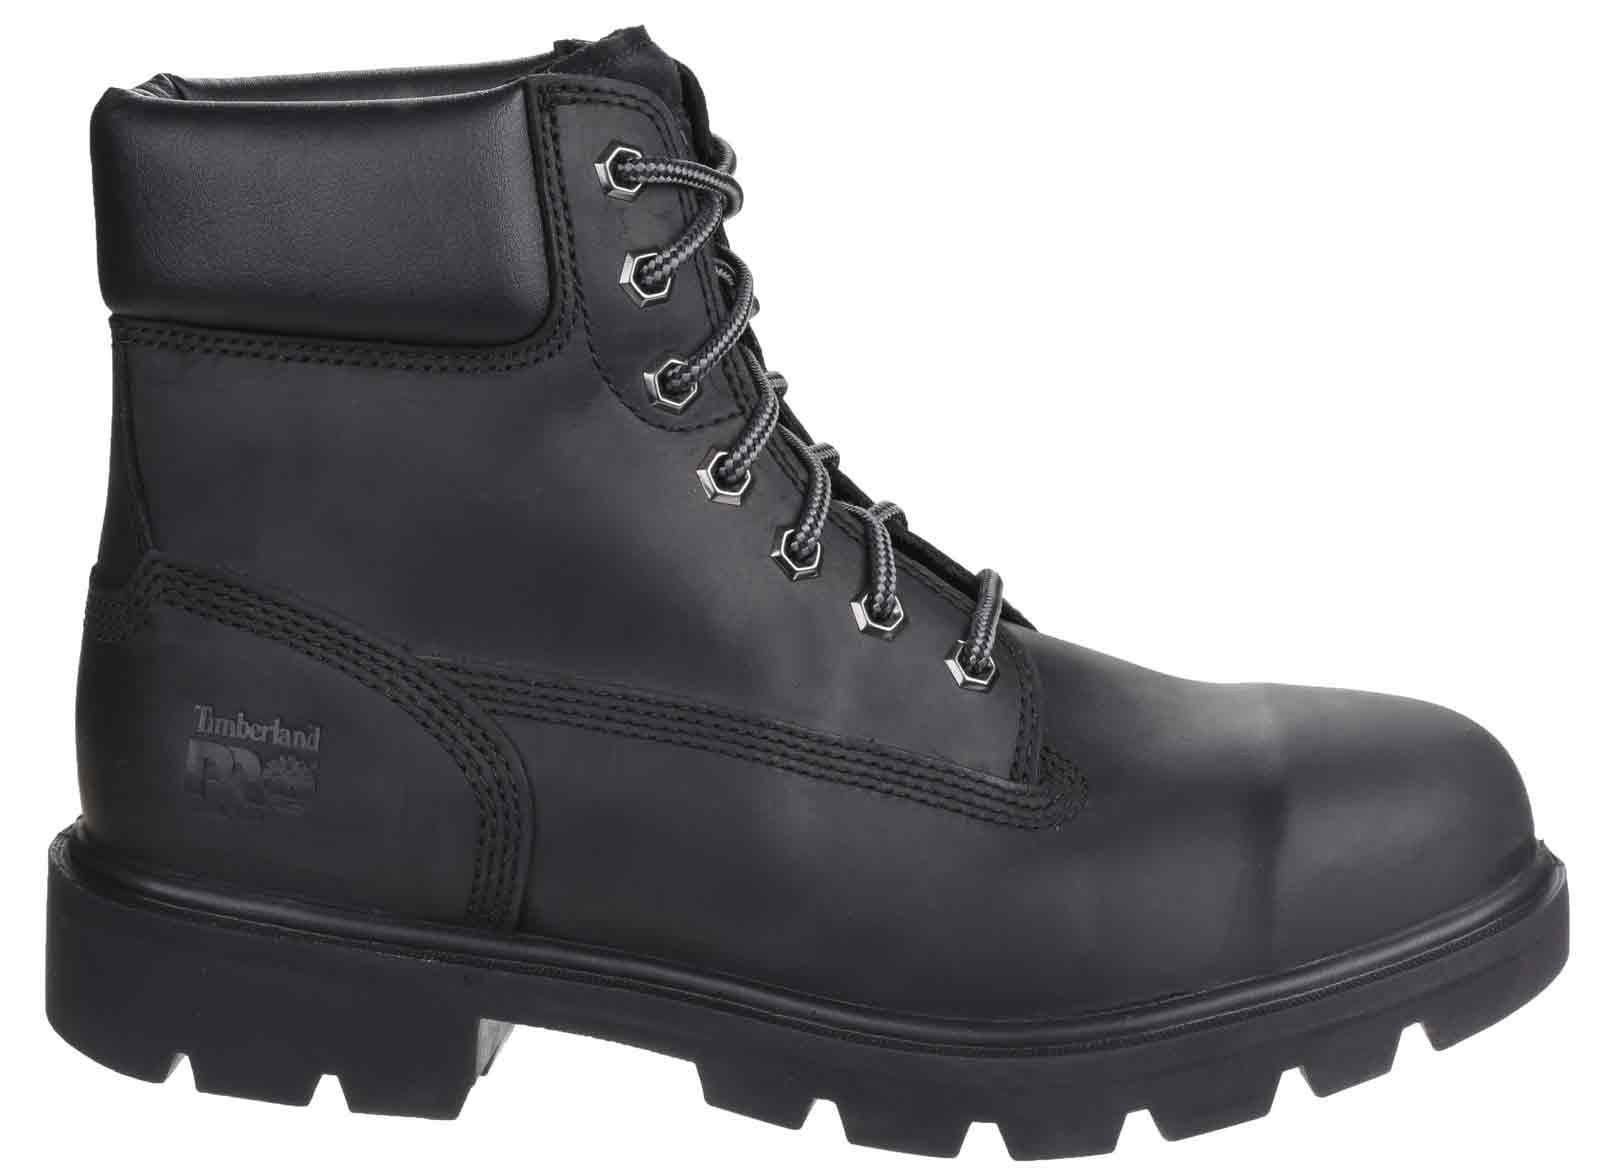 Timberland Pro Workwear Sawhorse Lace up Safety Boot - Standard Safety Boots  - Mens Safety Boots & Shoes - Safety Footwear - Best Workwear